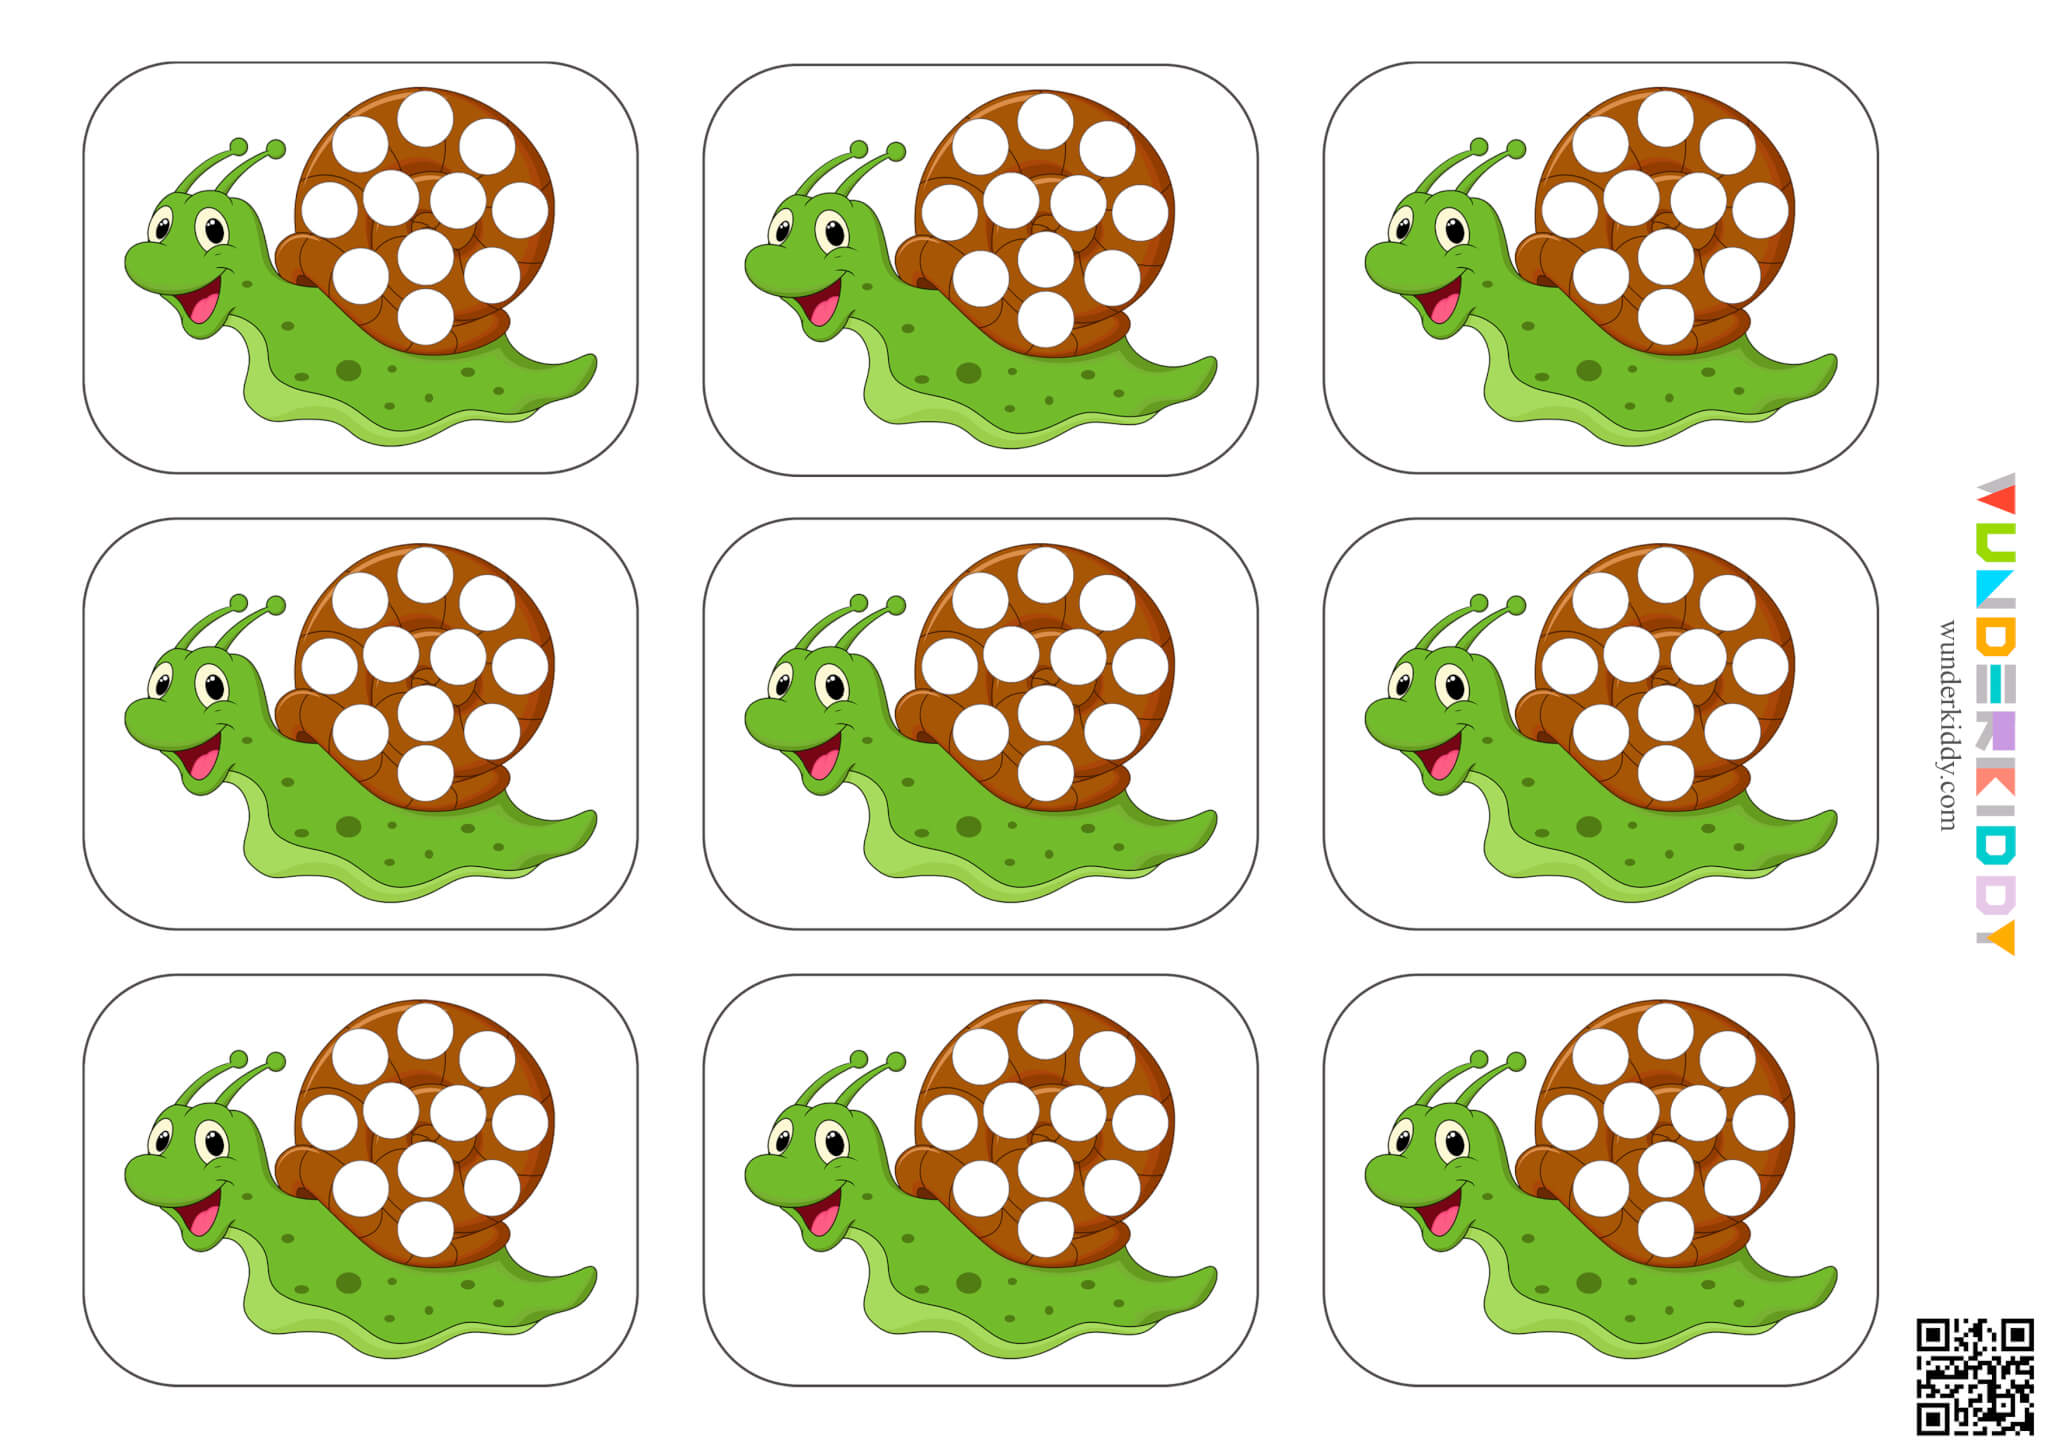 Snail Pattern Activity for Kids - Image 6